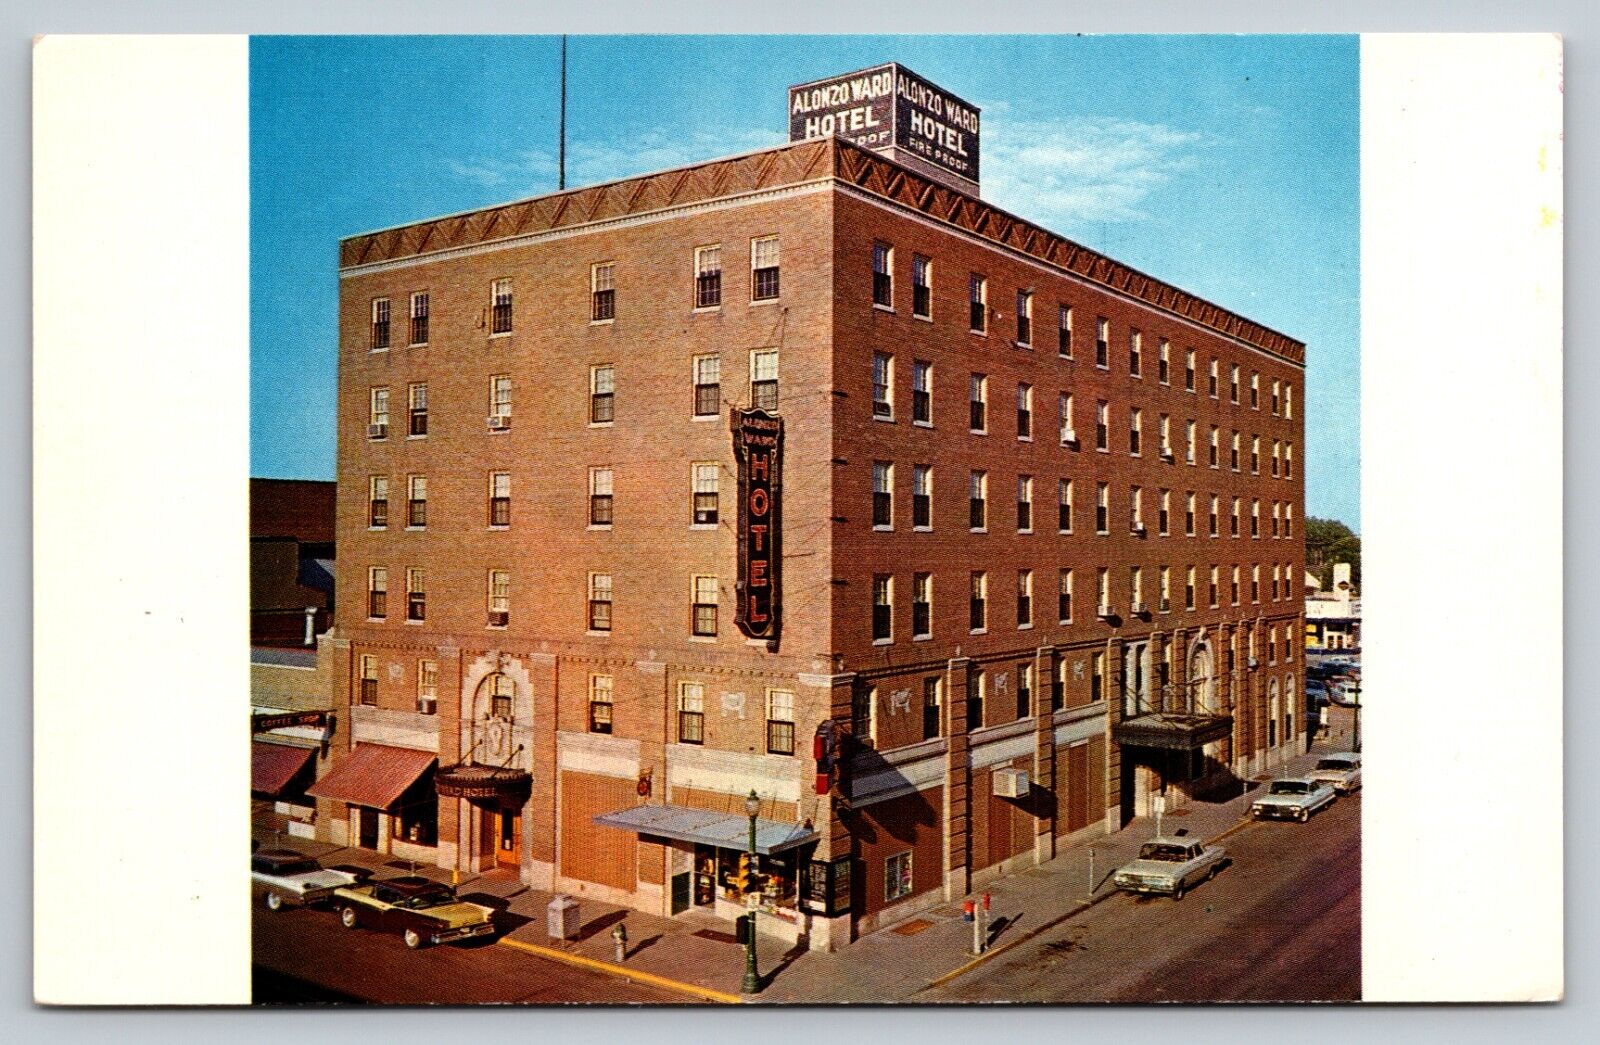 Aberdeen SD-South Dakota Alonzo Ward Hotel  Vintage Postcard